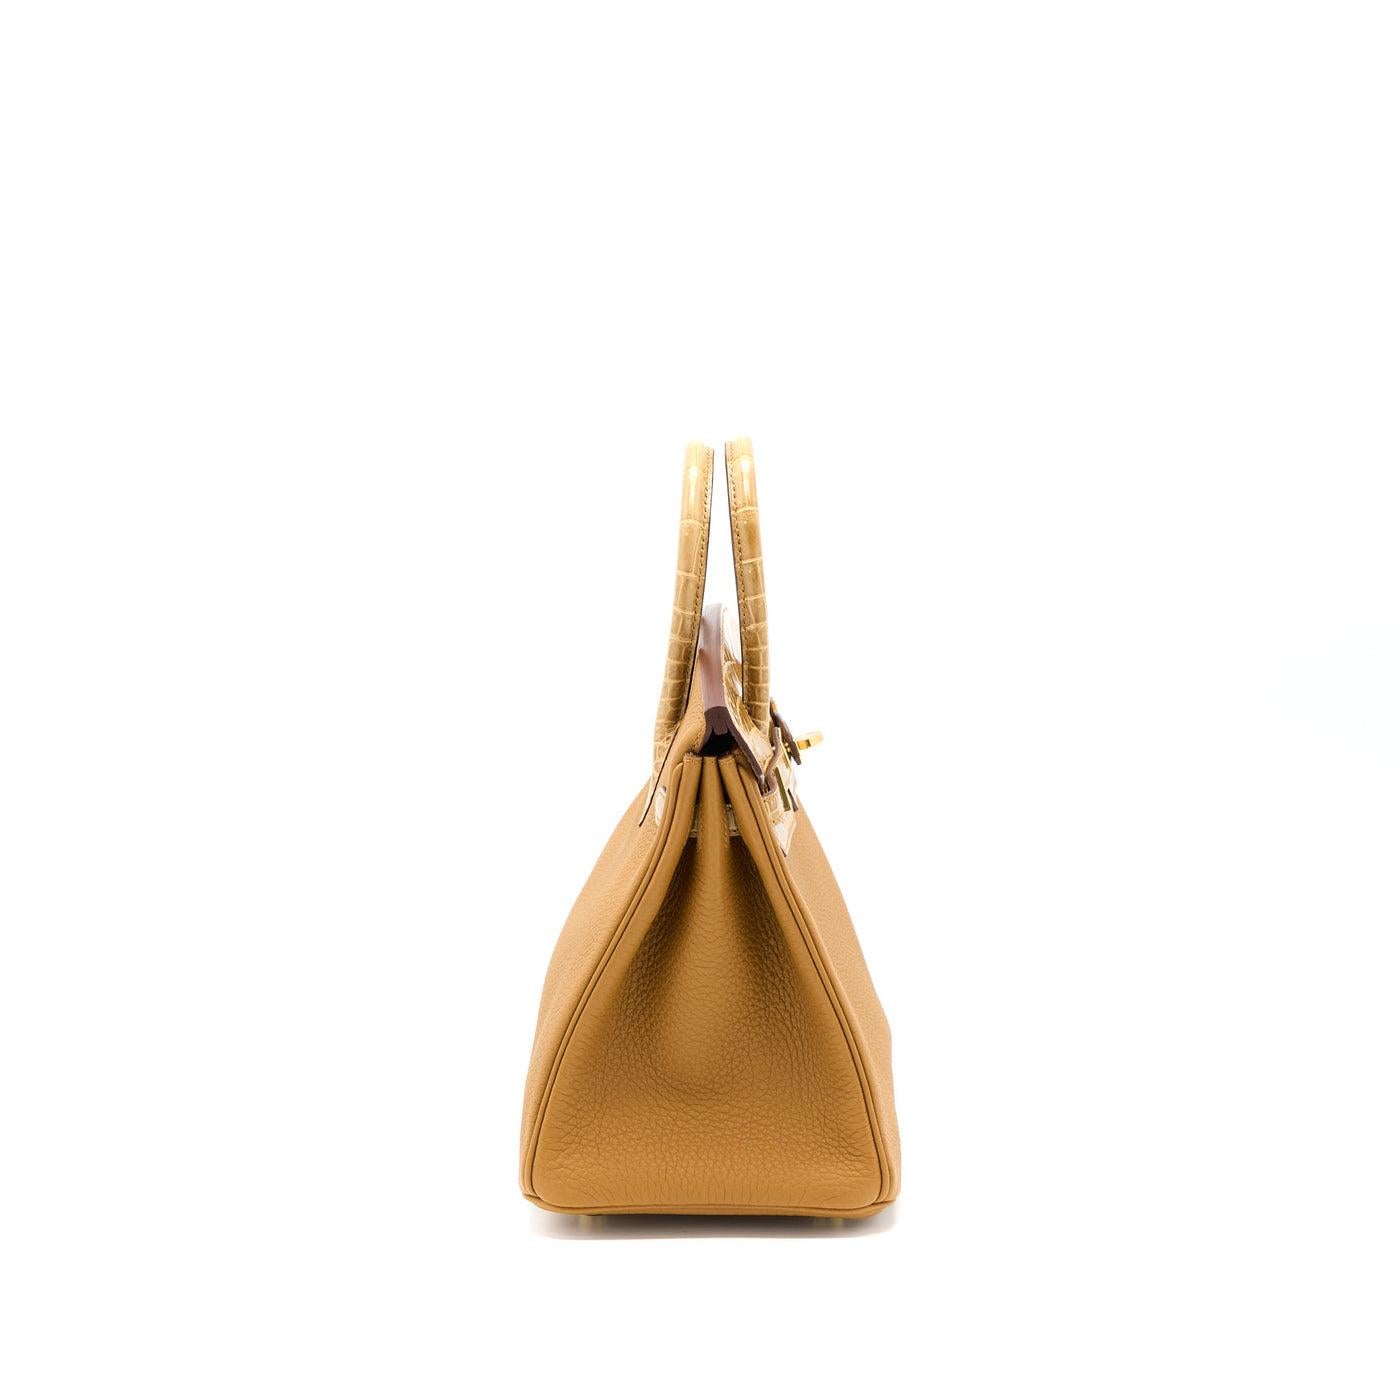 Hermes Birkin Touch bag 30 Caramel/ Tabac camel Togo leather/ Niloticus  crocodile skin Gold hardware